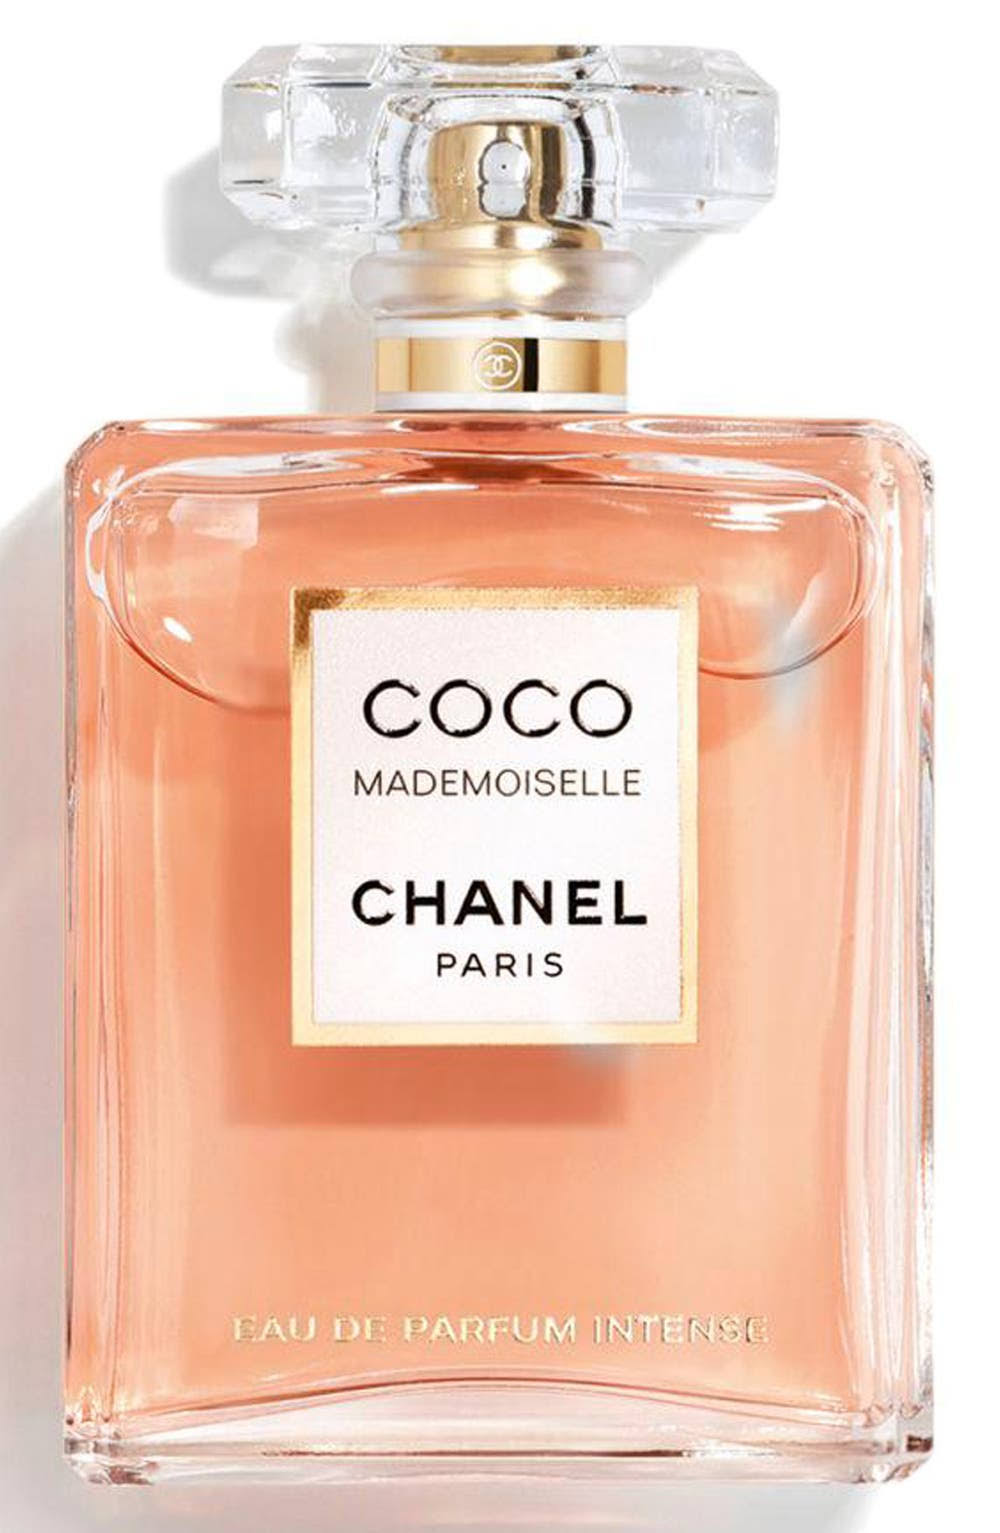 CHANEL Coco Mademoiselle Eau de Parfum Intense Spray - 50 ml